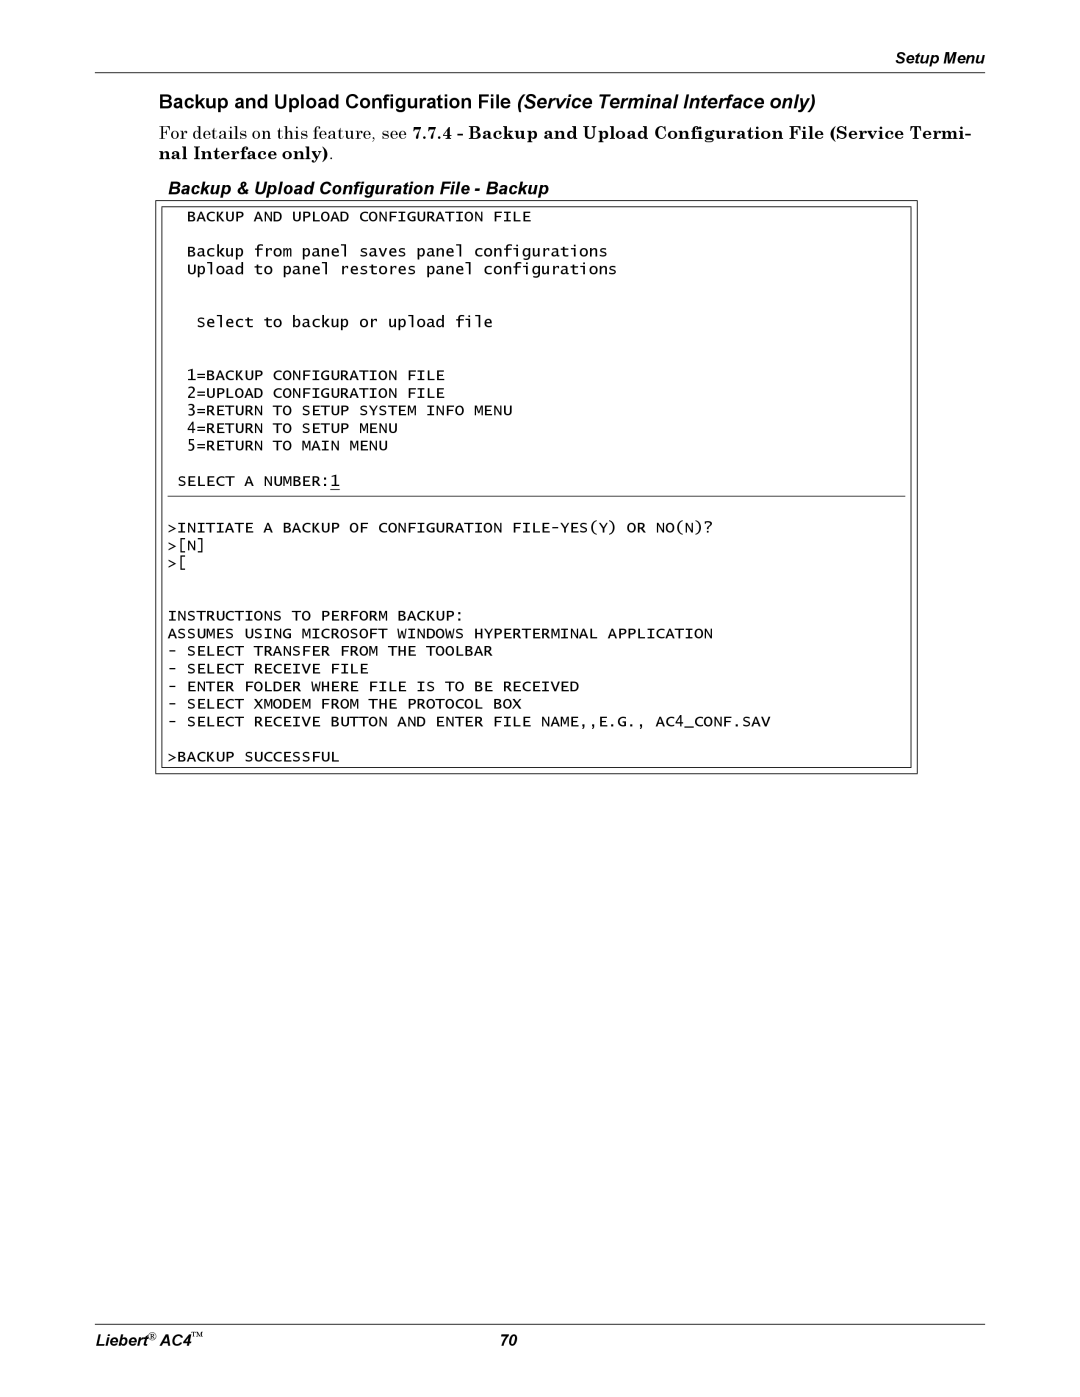 Emerson user manual Backup & Upload Configuration File - Backup, Setup Menu, Liebert AC4 